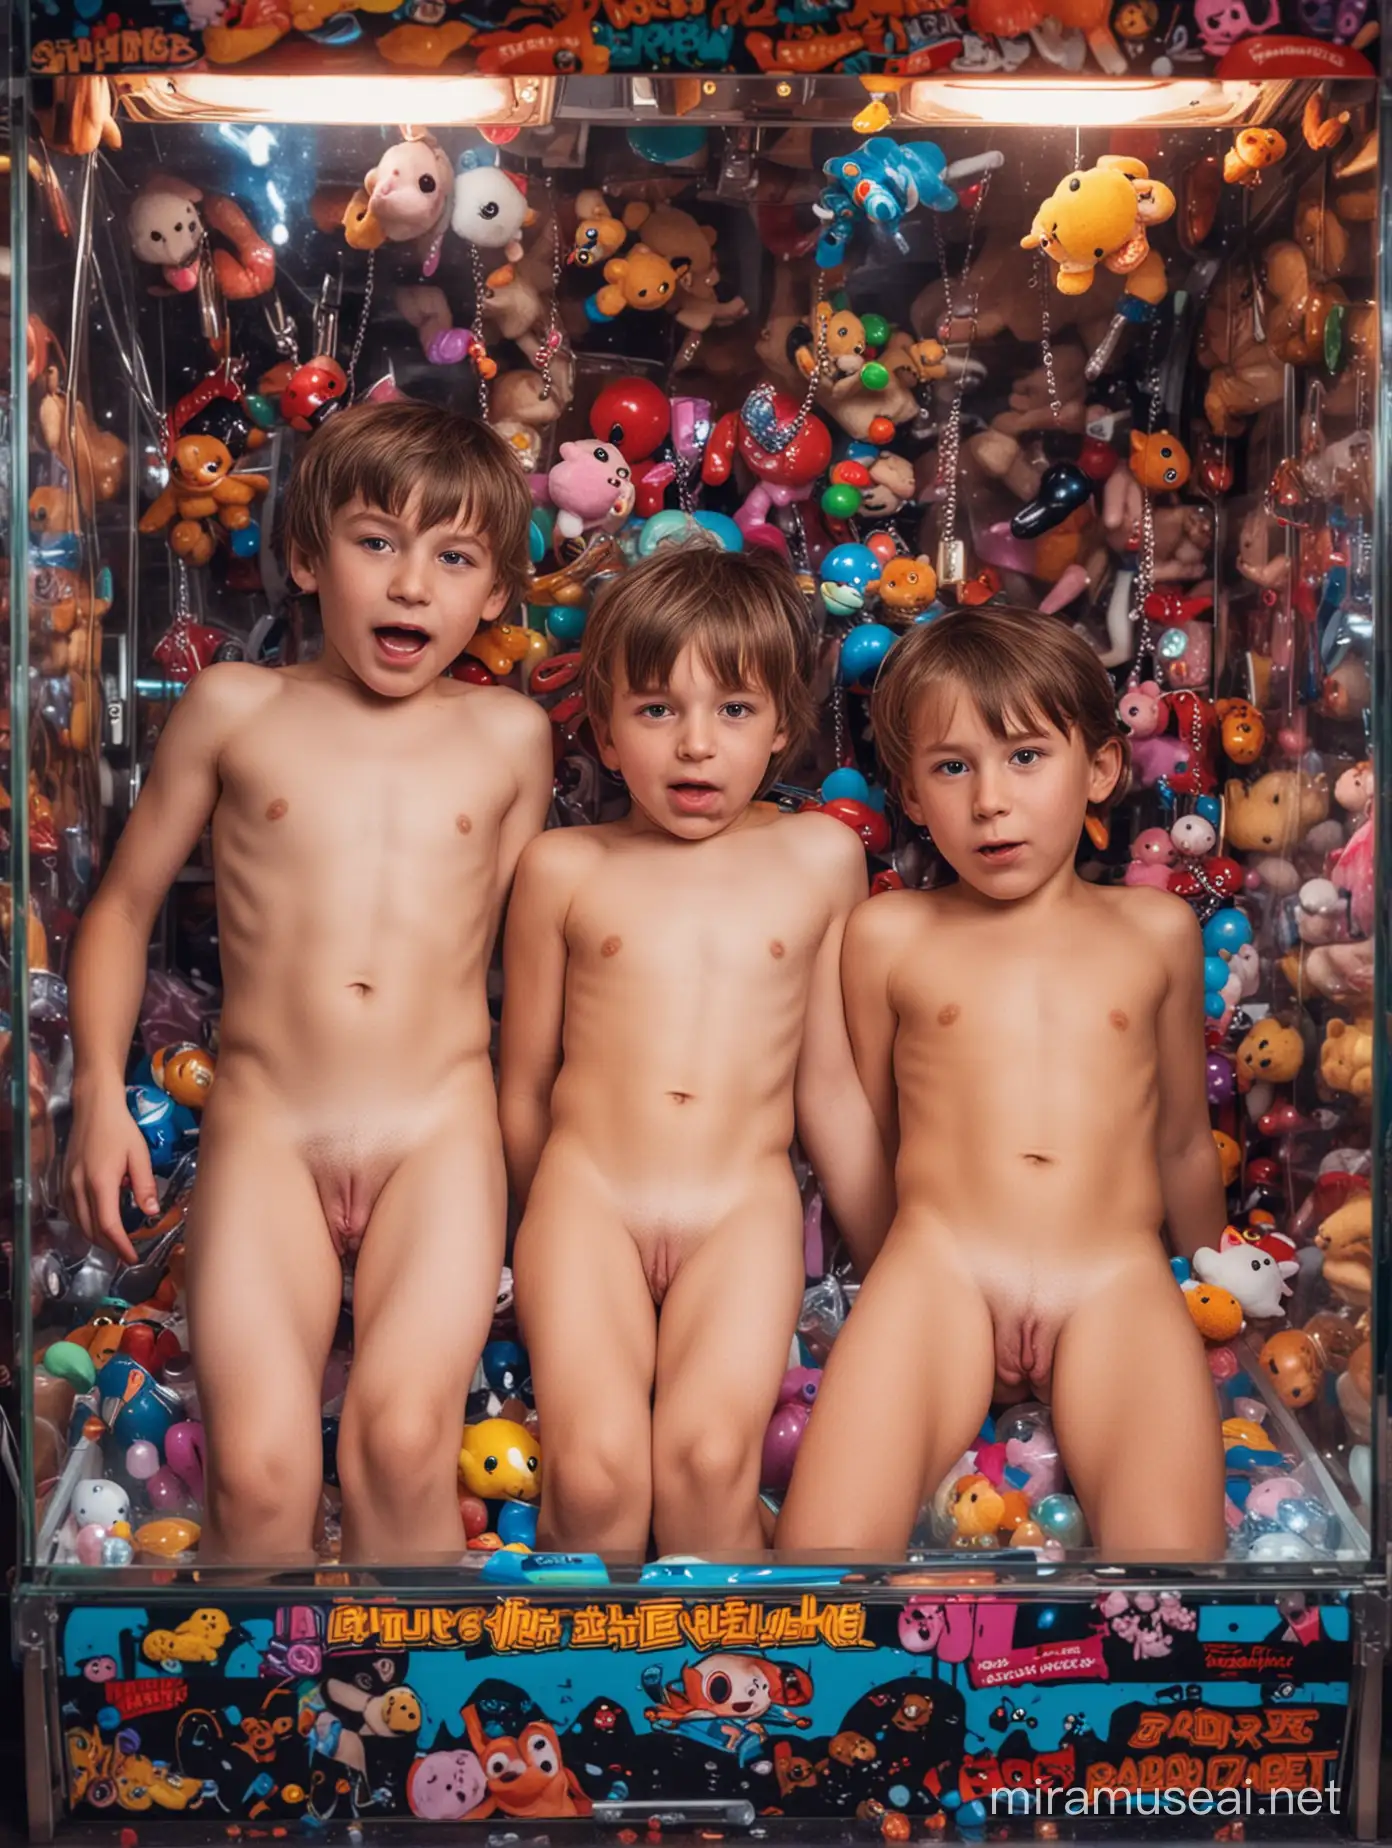 Playful Children Trapped in Arcade Claw Machine